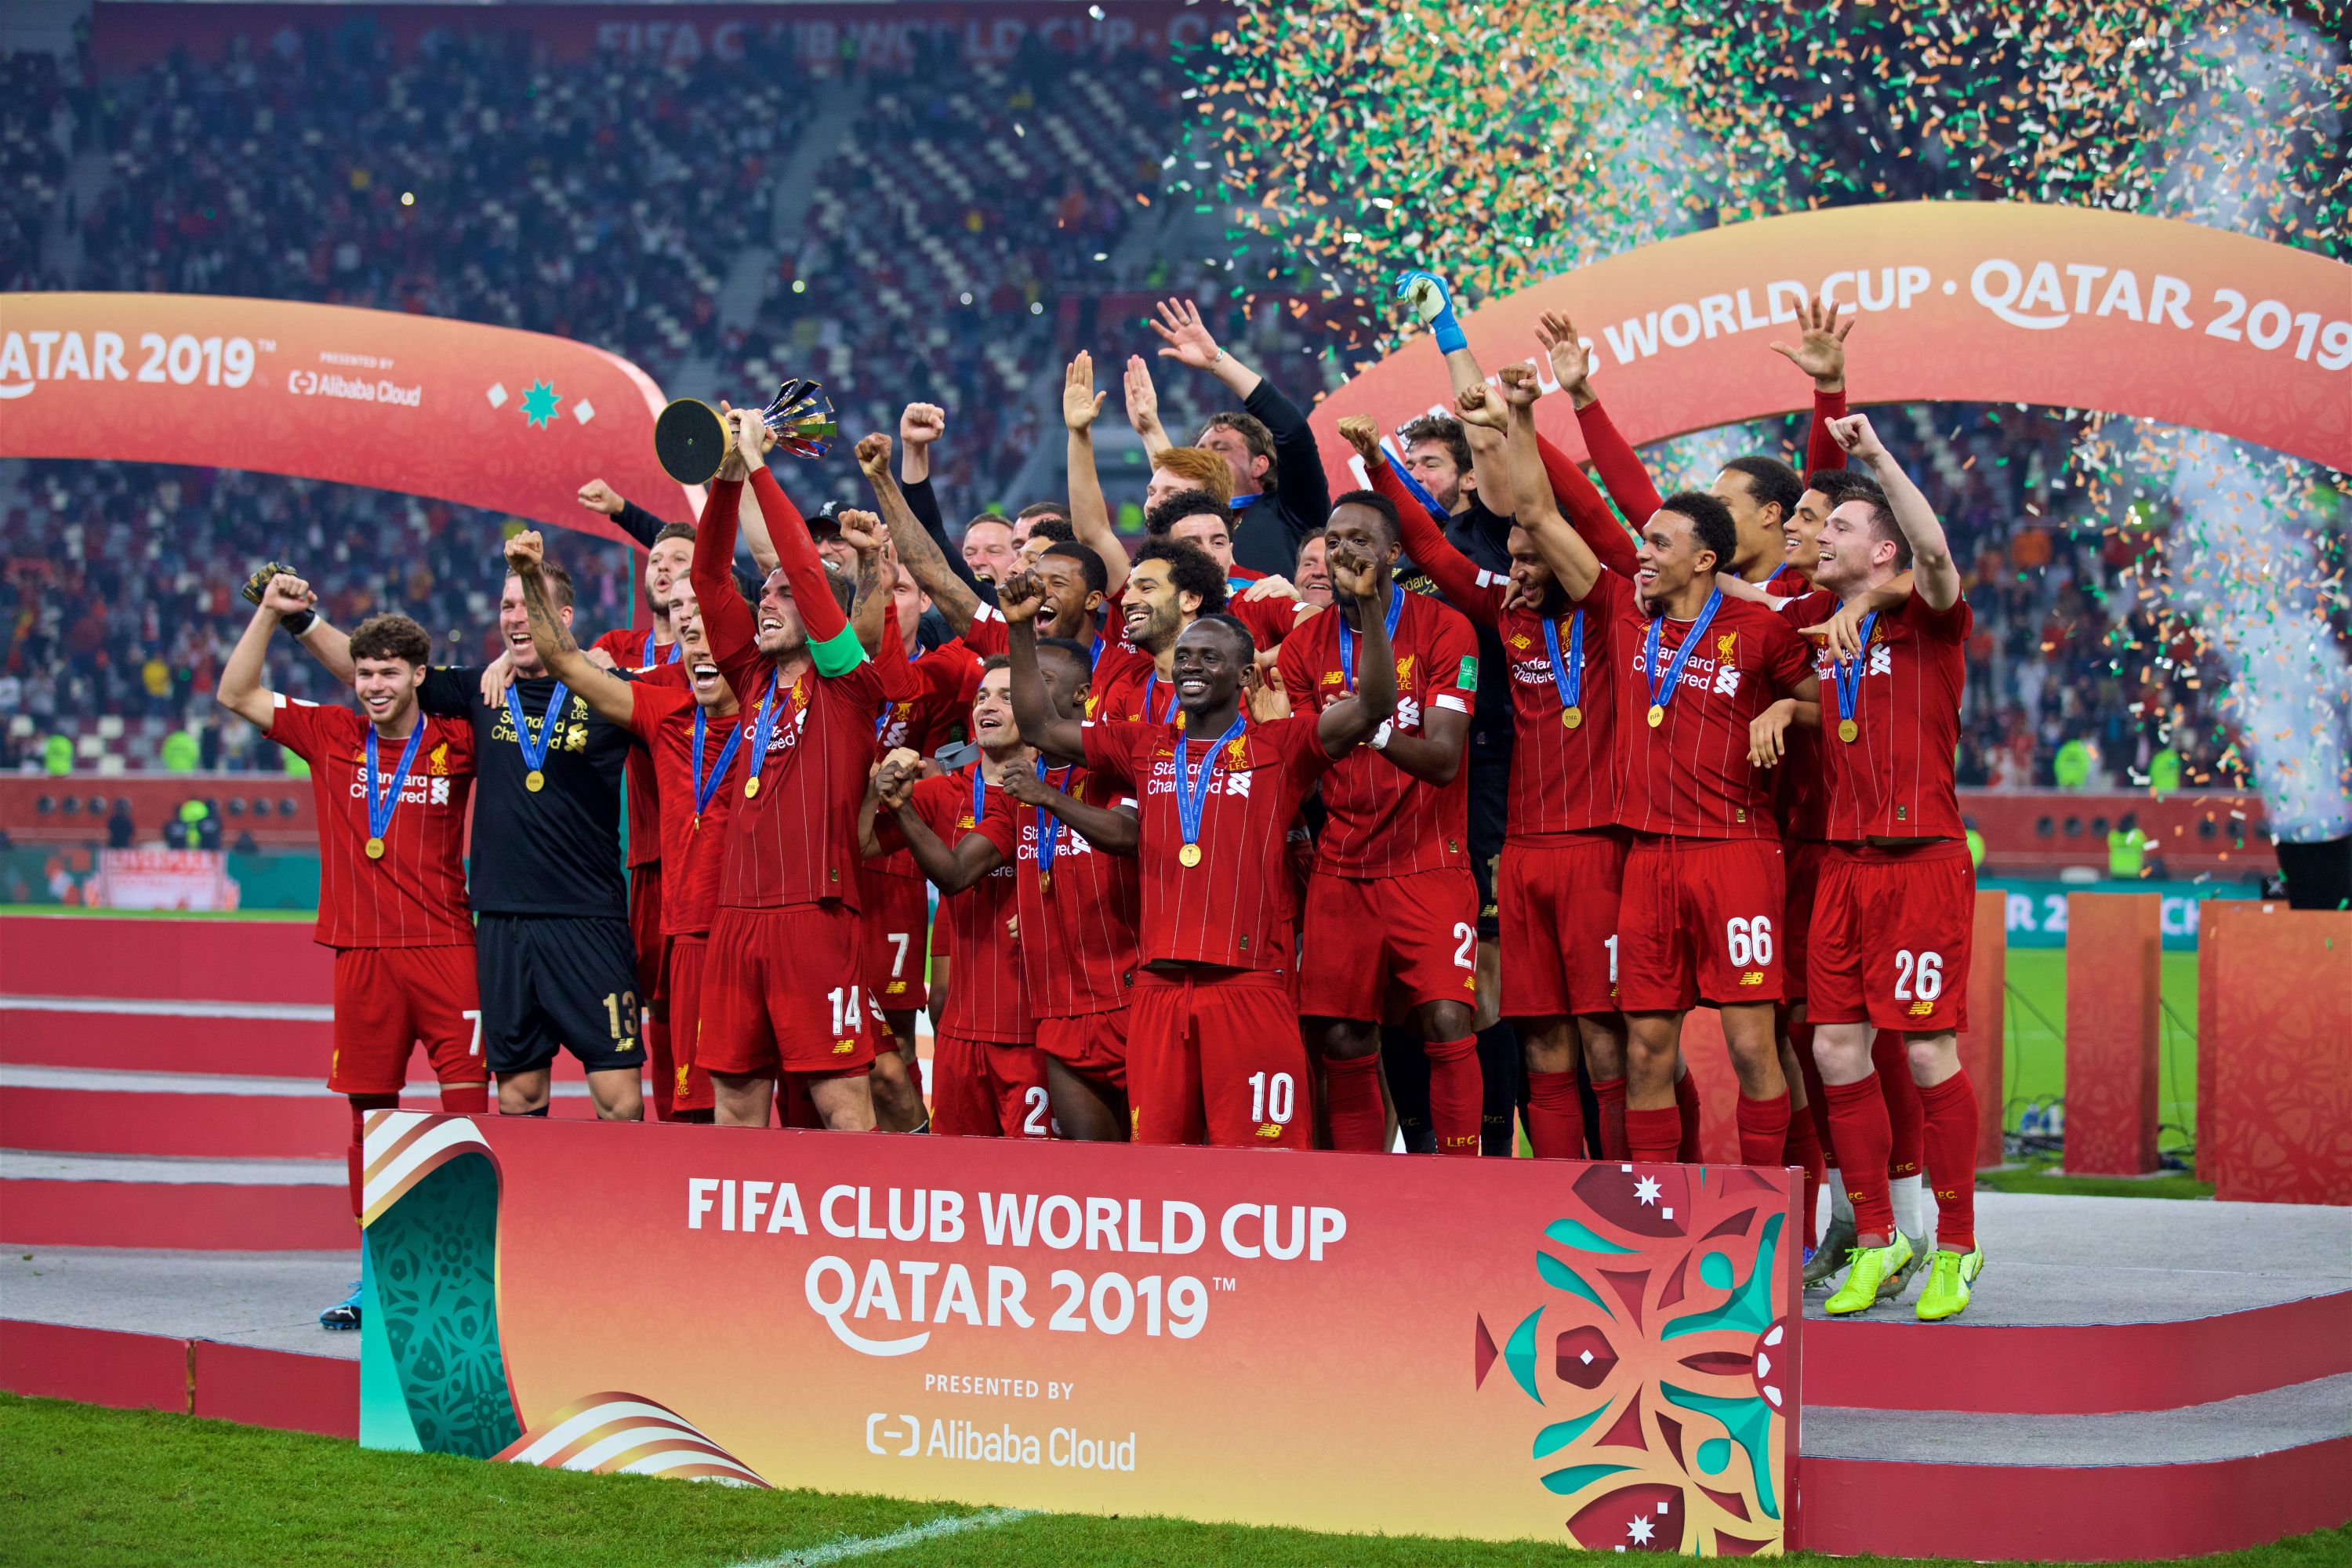 Photos: Liverpool lift the FIFA Club World Cup in Qatar